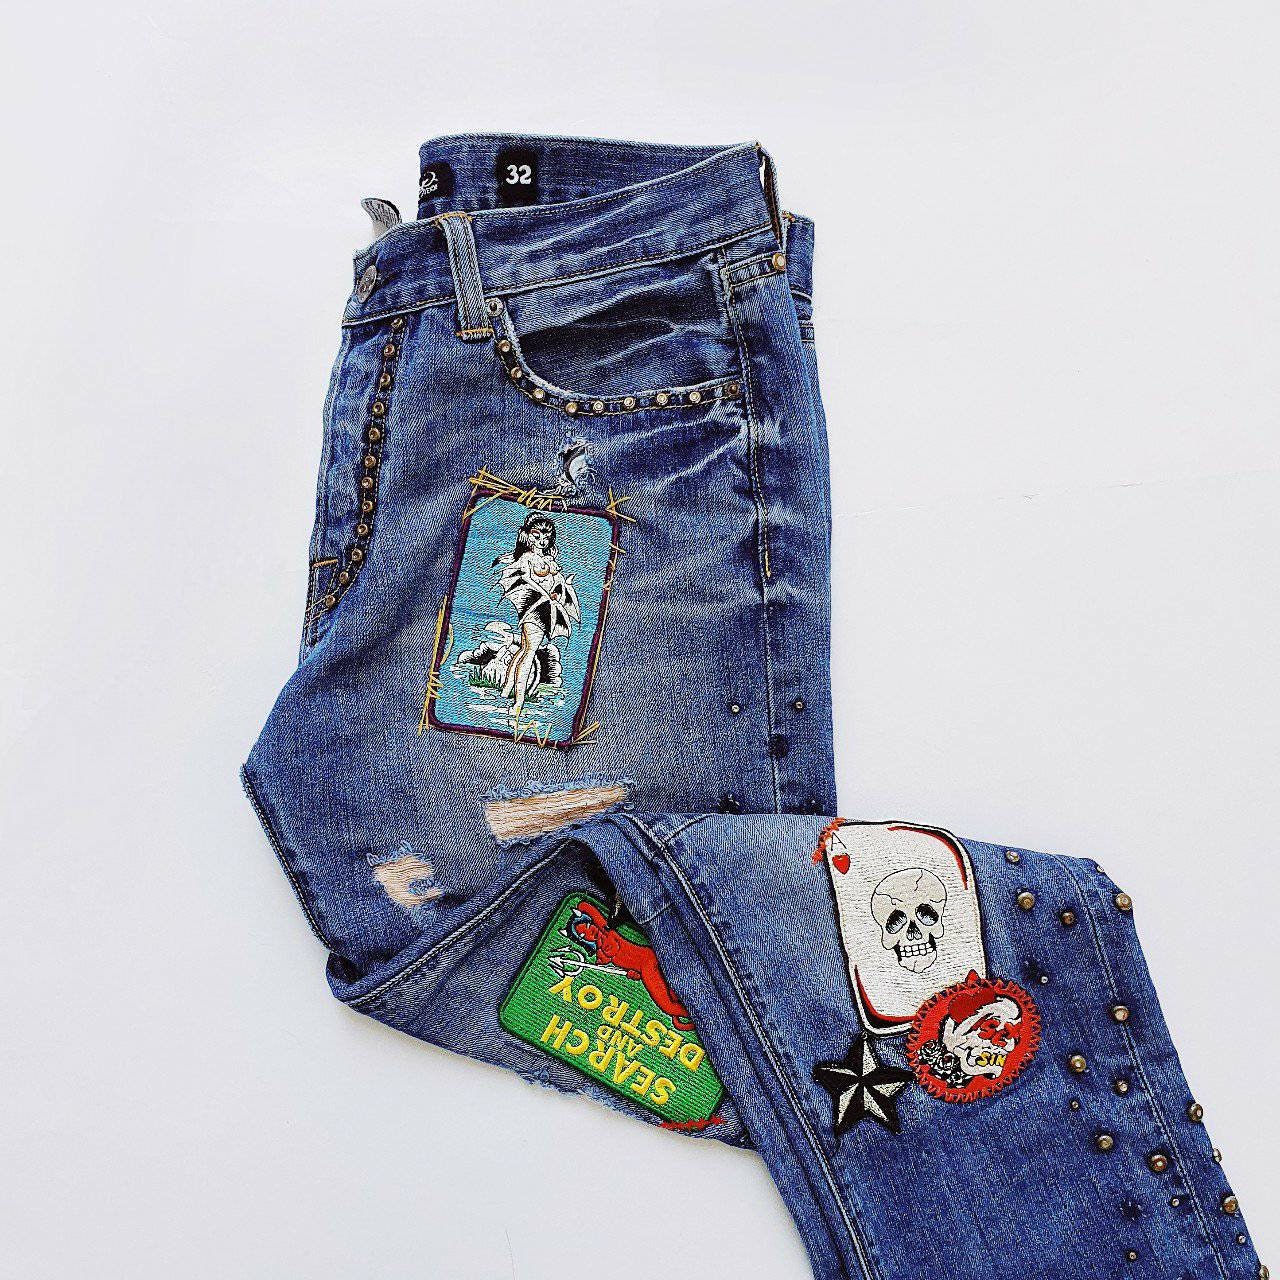 Vintage amazing denim Ed Hardy jeans / Christian Audigier | Etsy